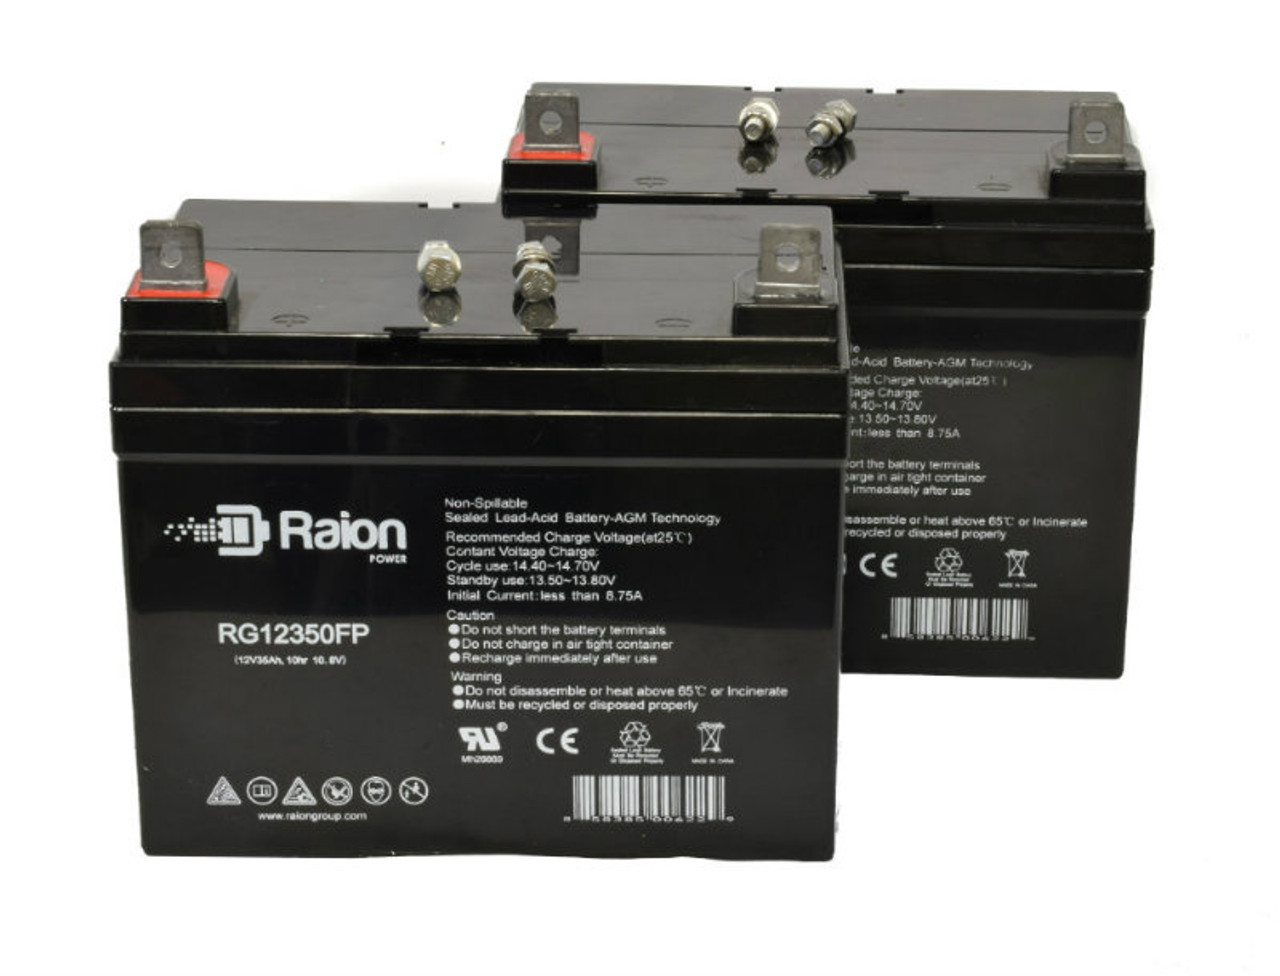 Raion Power Replacement 12V 35Ah Lawn Mower Battery for Ingersol Equipment 5720V - 2 Pack